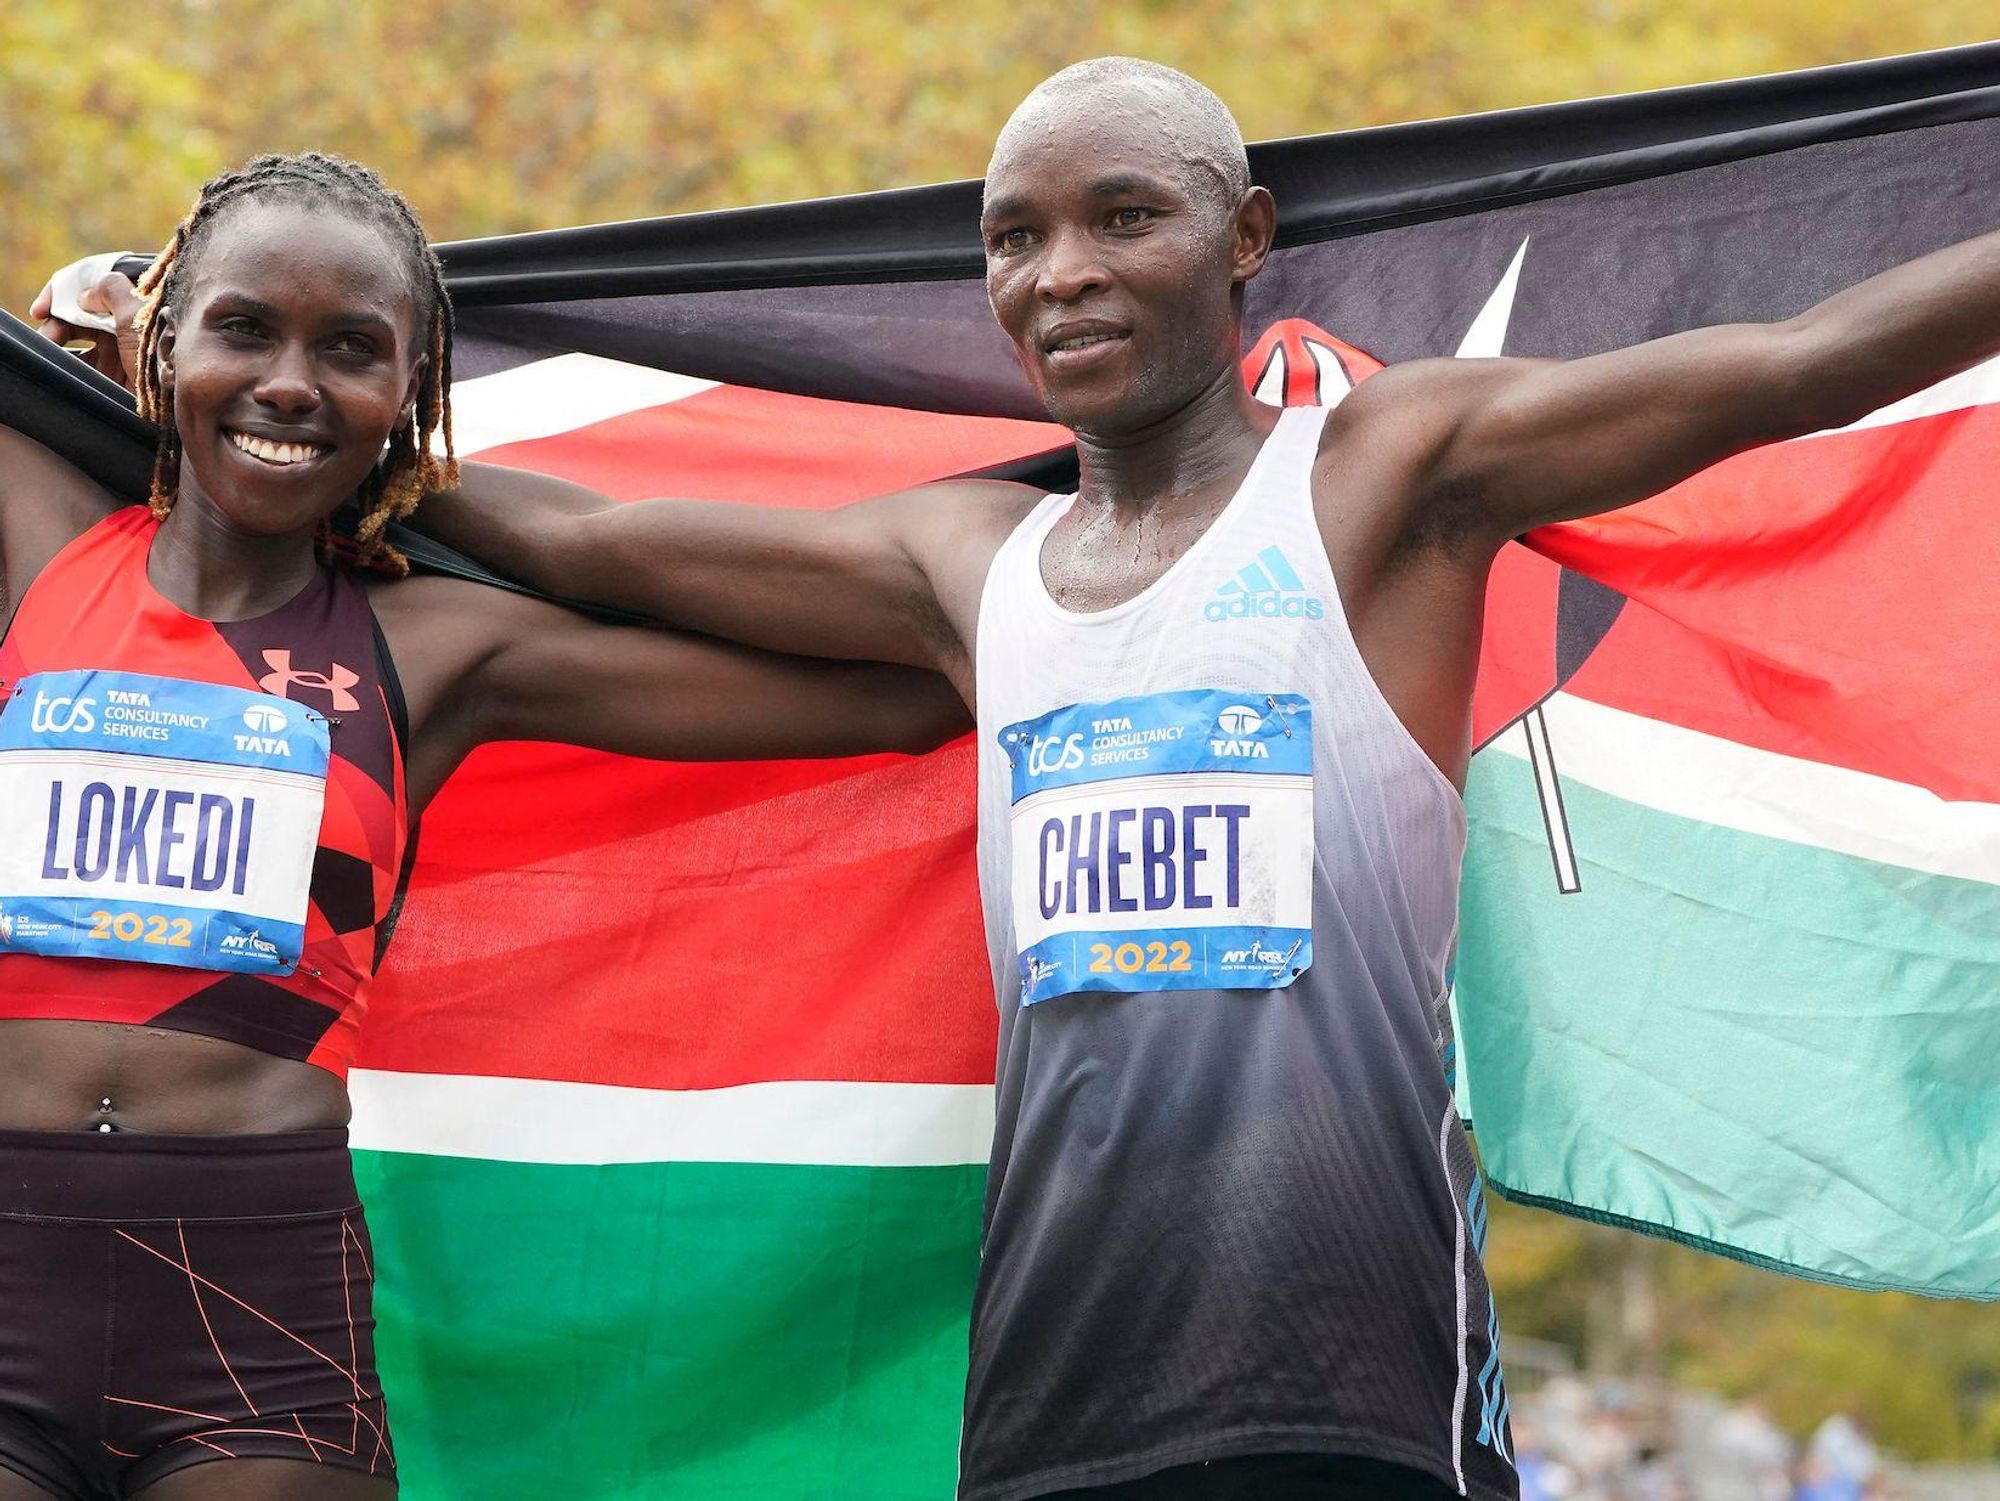 Kenya's Evans Chebet and Sharon Loked